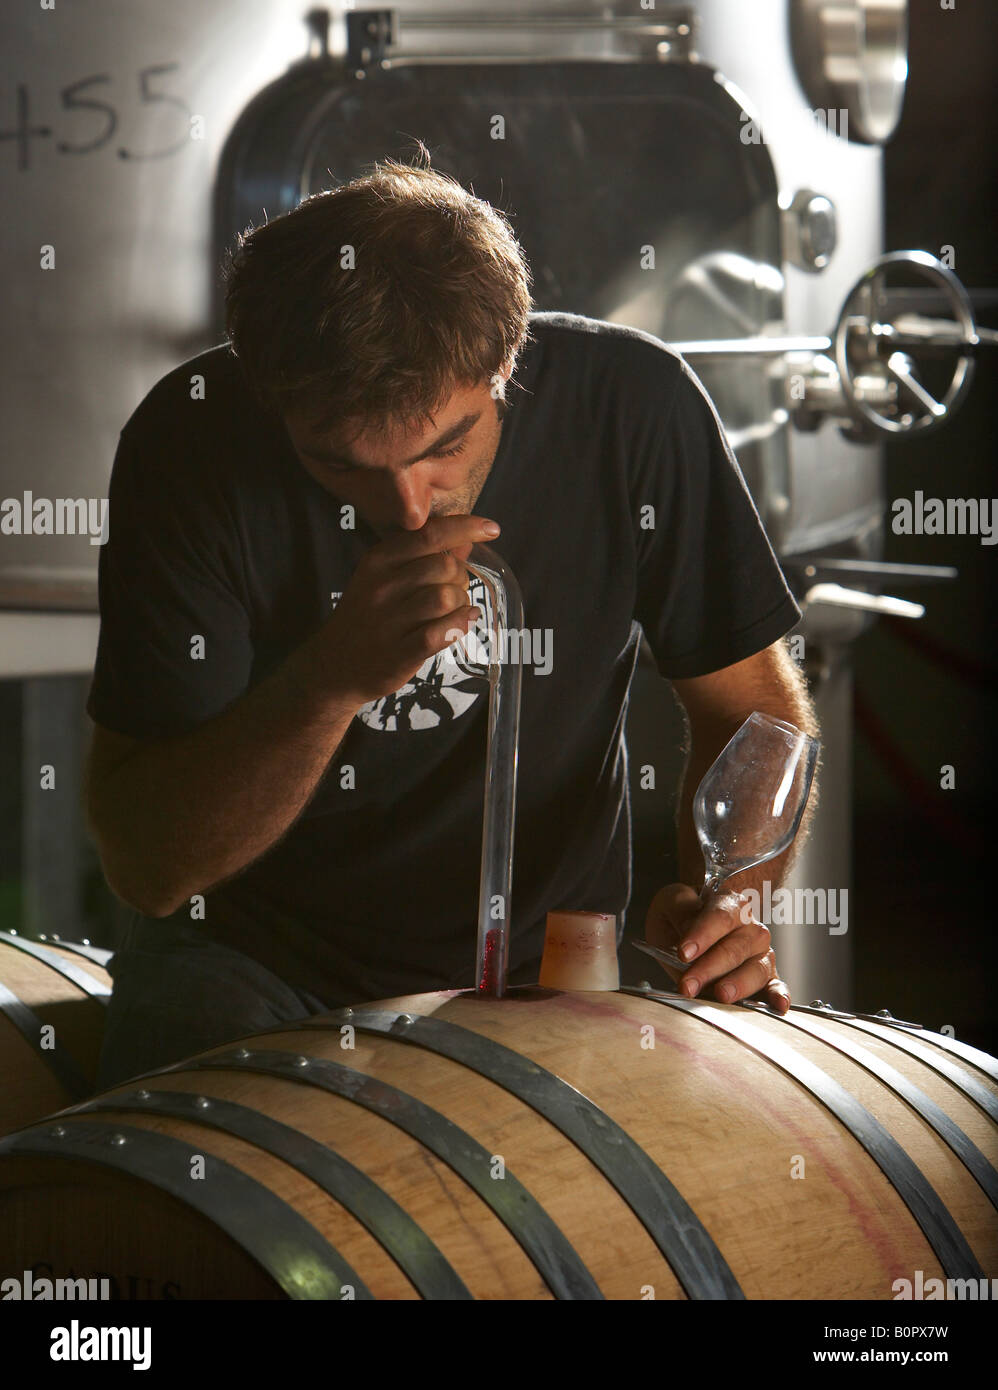 David Ramonteu winemaker hatton estate wine maker checking crate of wine using wine thief Stock Photo